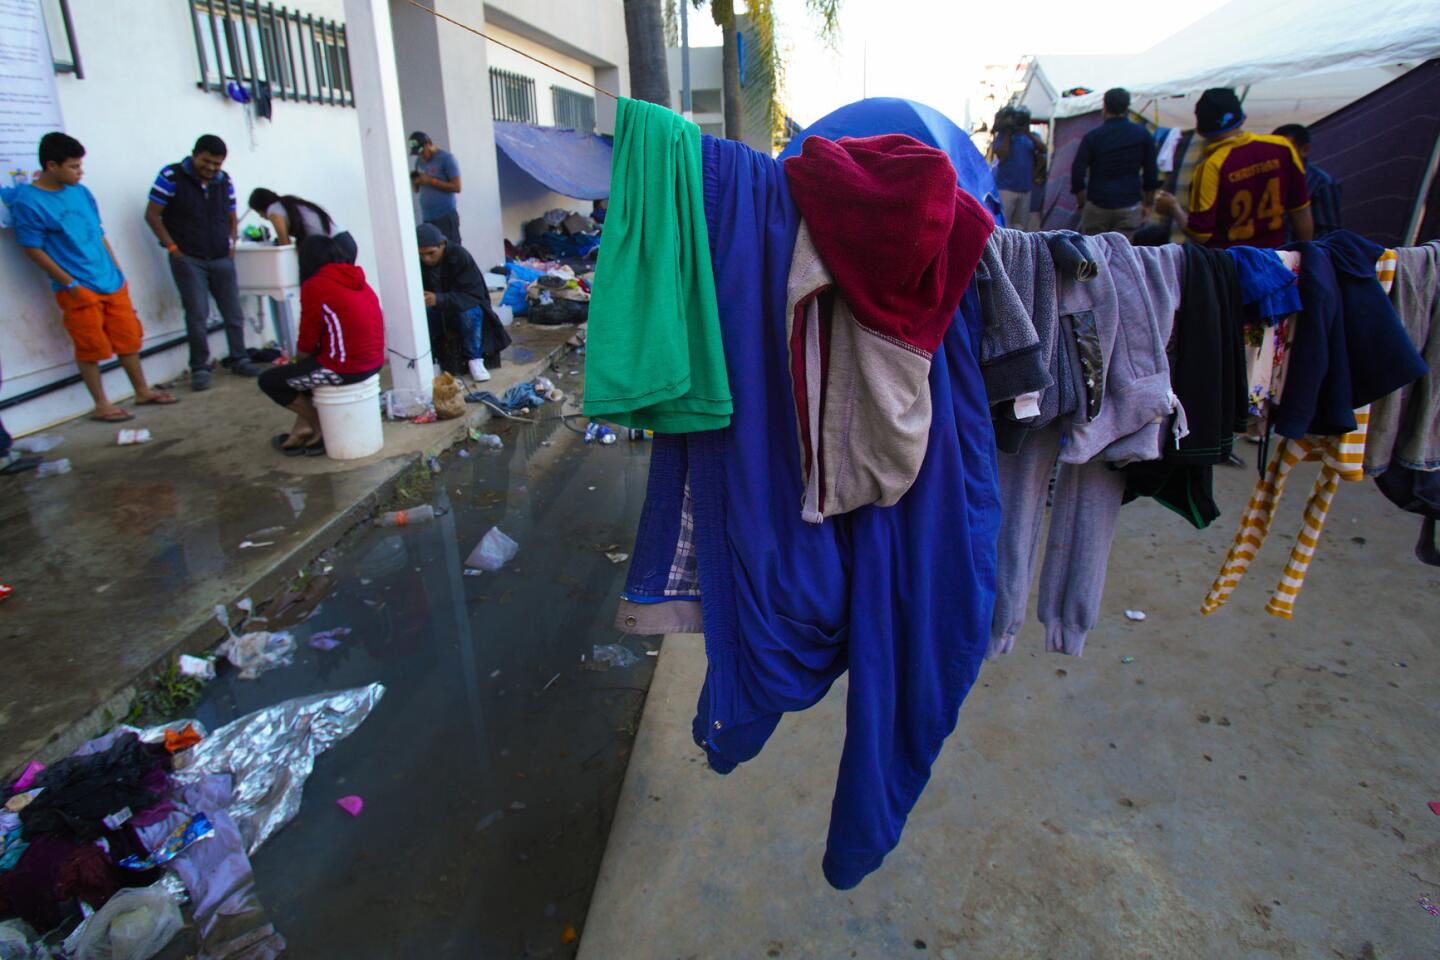 Life for Central American migrants in Tijuana